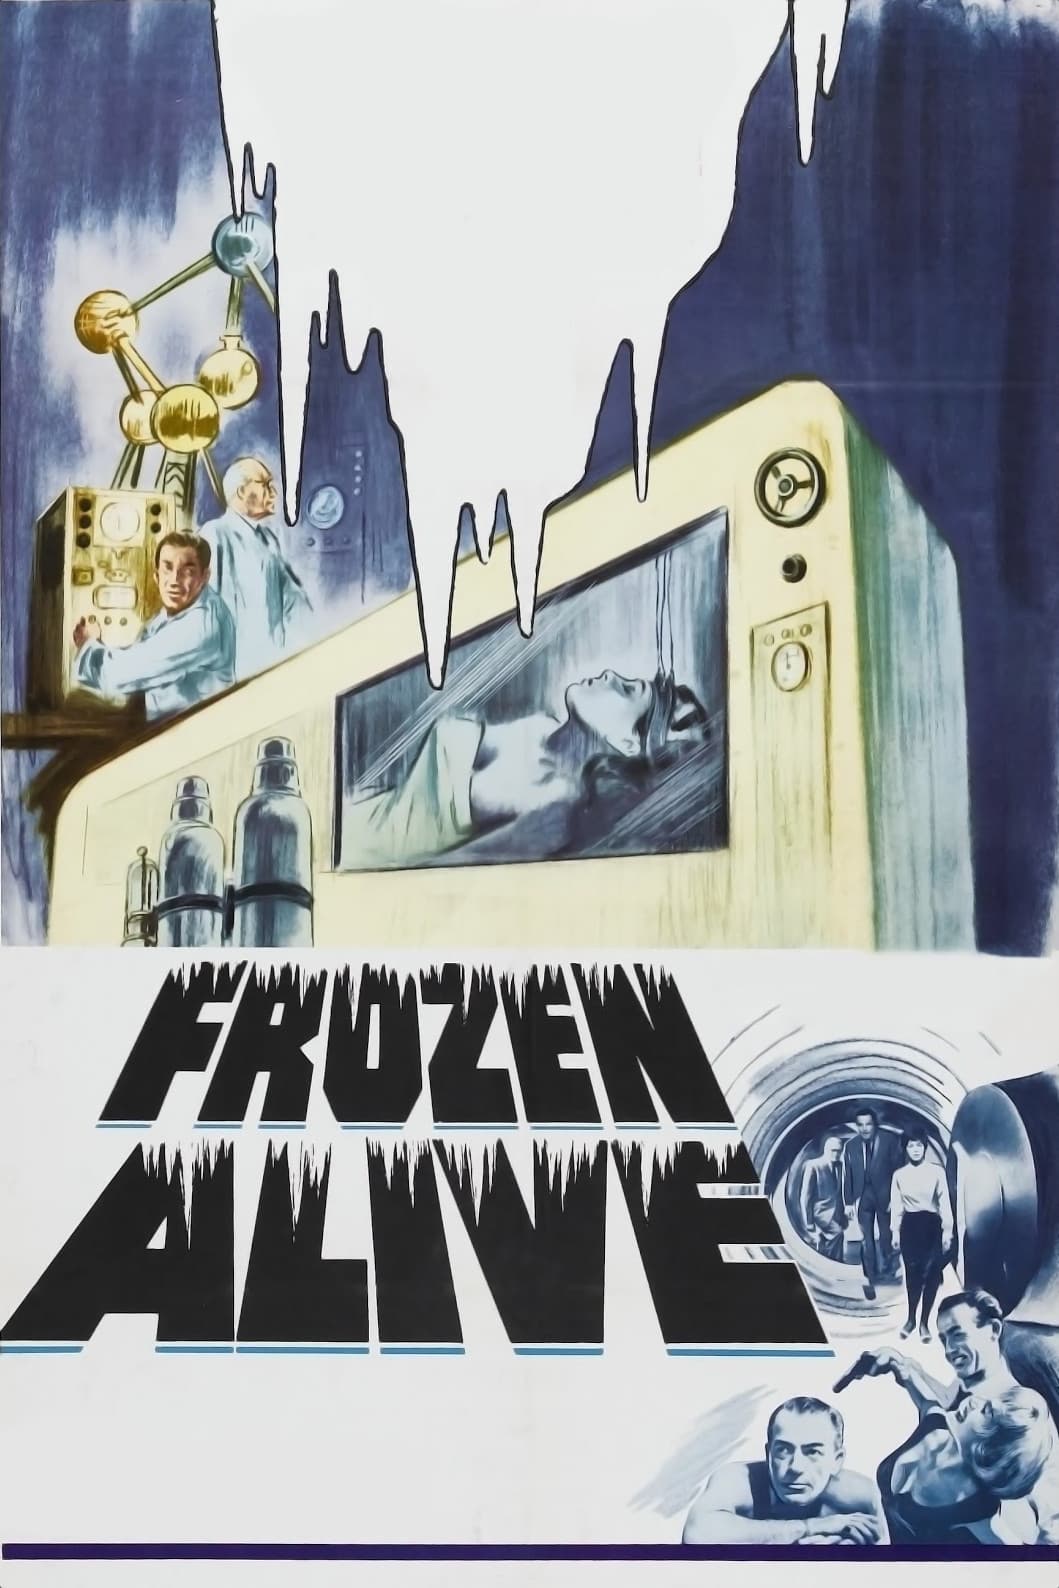 Frozen Alive (1964)